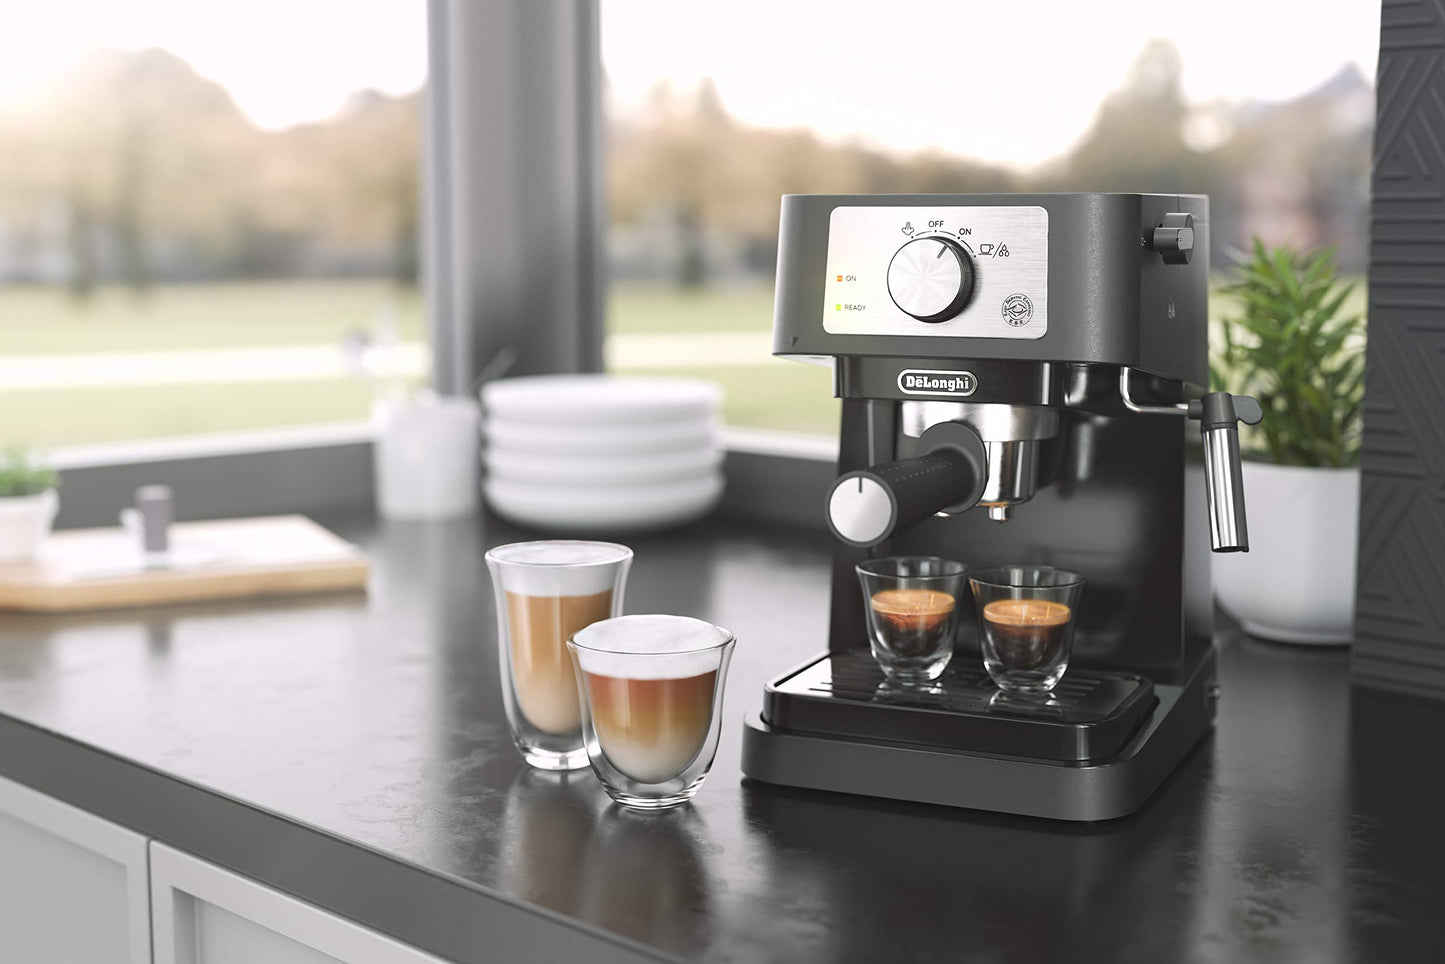 De'Longhi Stilosa Manual Espresso Machine, Latte & Cappuccino Maker, 15 Bar Pump Pressure + Milk Frother Steam Wand, Black / Stainless, EC260BK, 13.5 x 8.07 x 11.22 inches - Like New